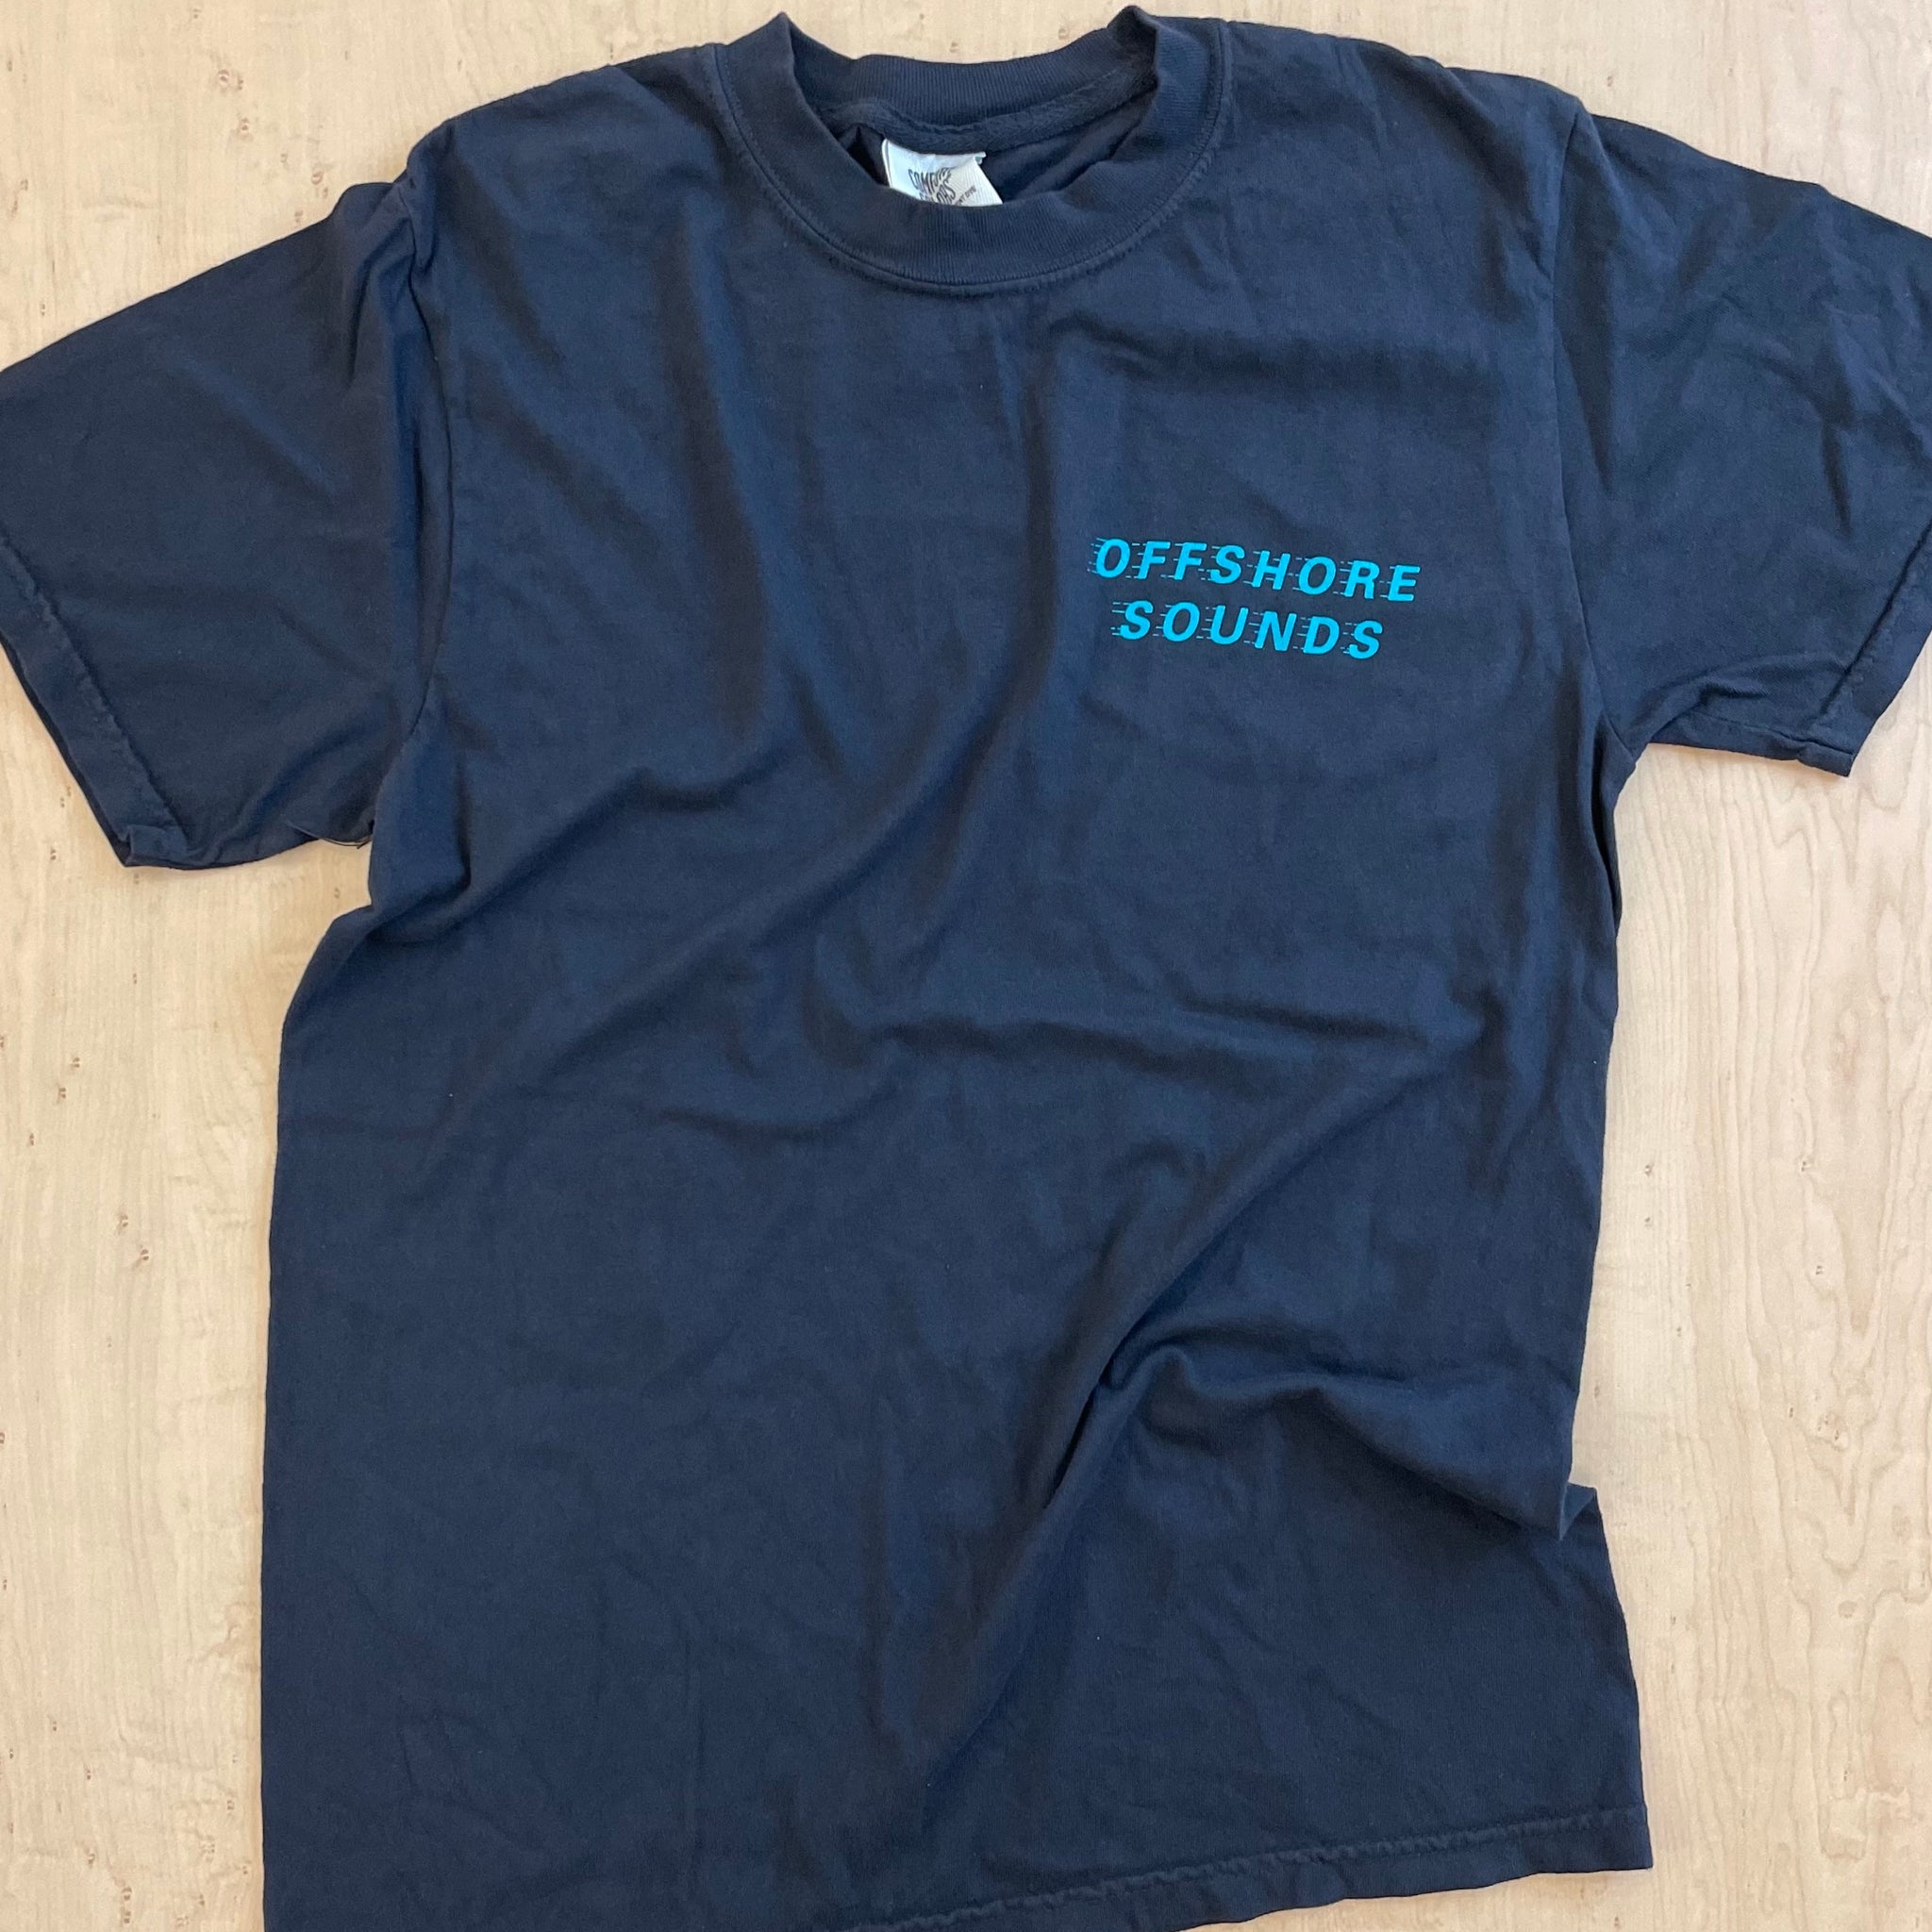 Offshore Sounds Logo T-shirt